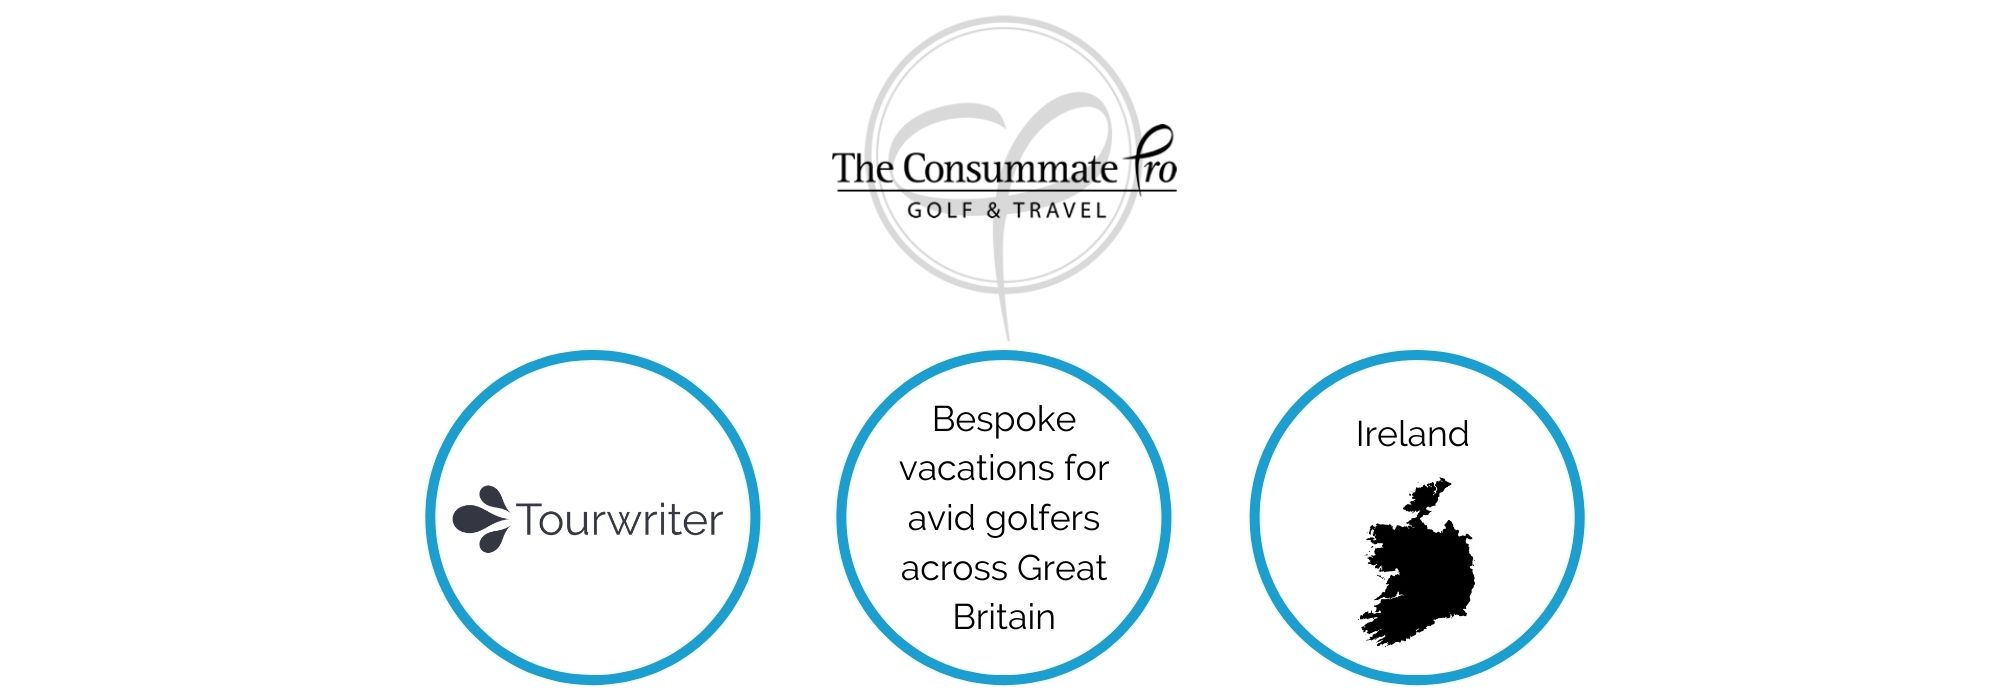 golf tour operator software story 